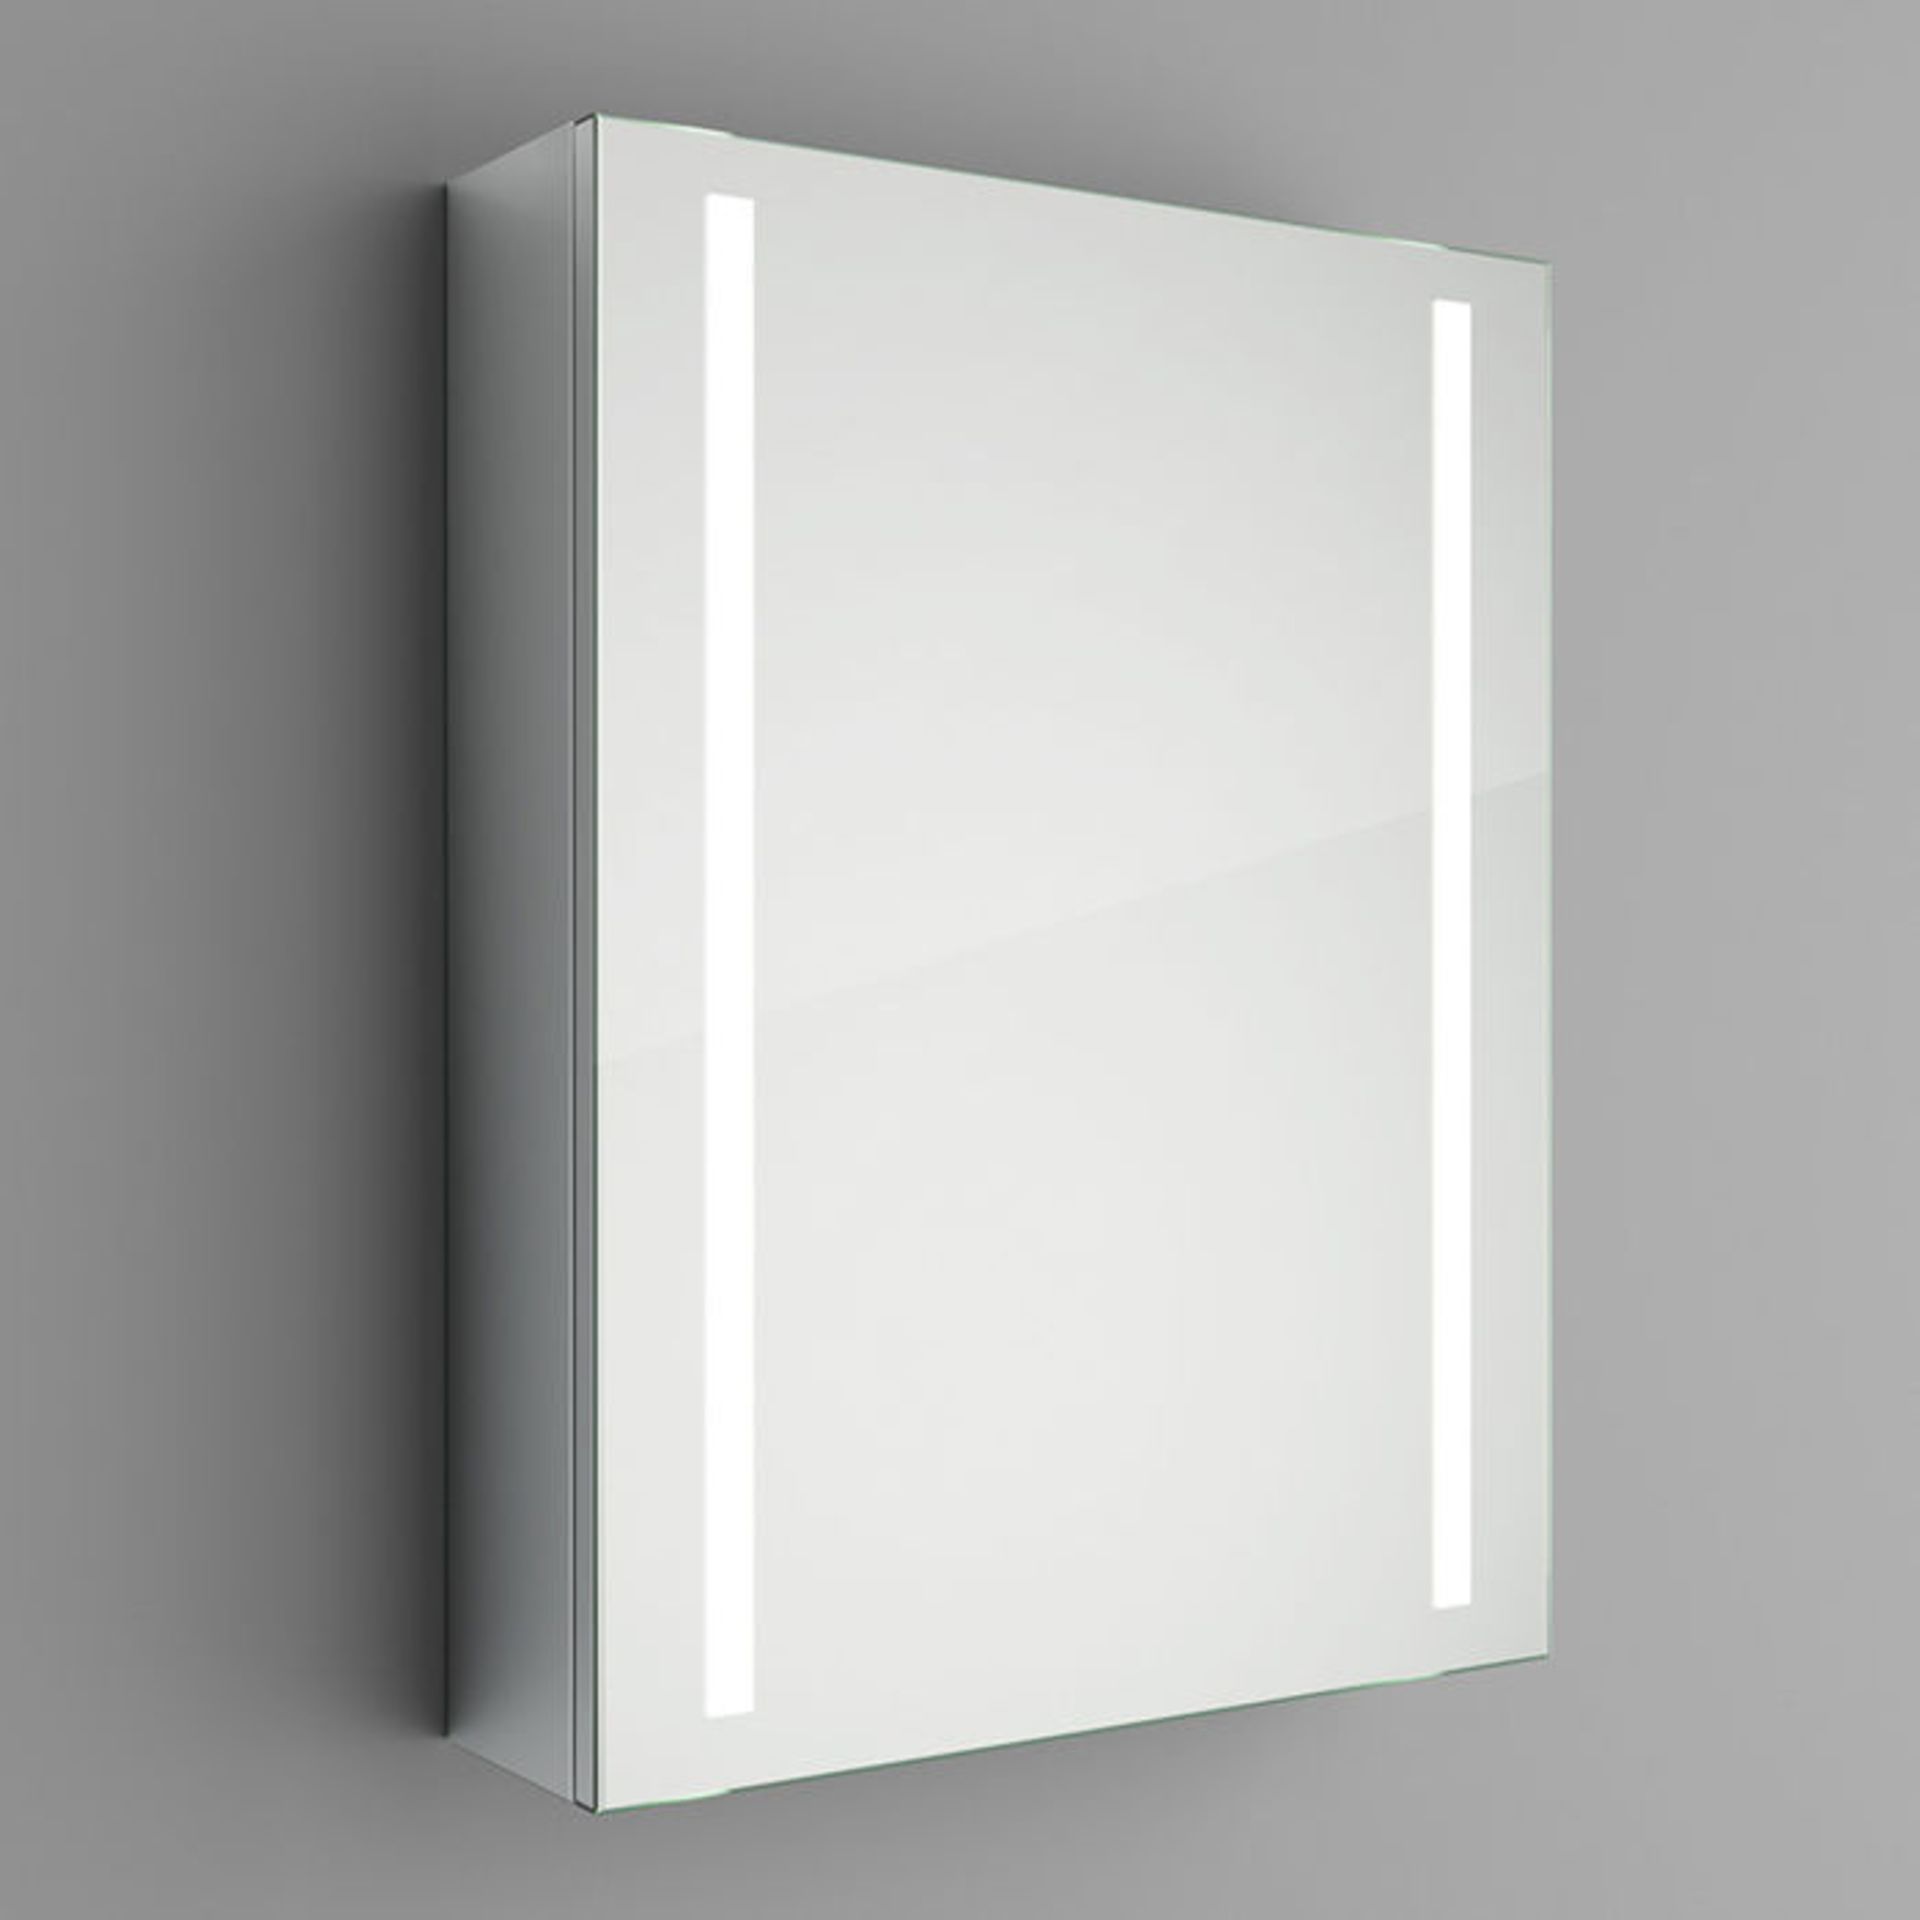 (ZL27) 500x650mm Dawn Illuminated LED Mirror Cabinet. RRP £399.99. Energy efficient LED lighting, - Image 6 of 6